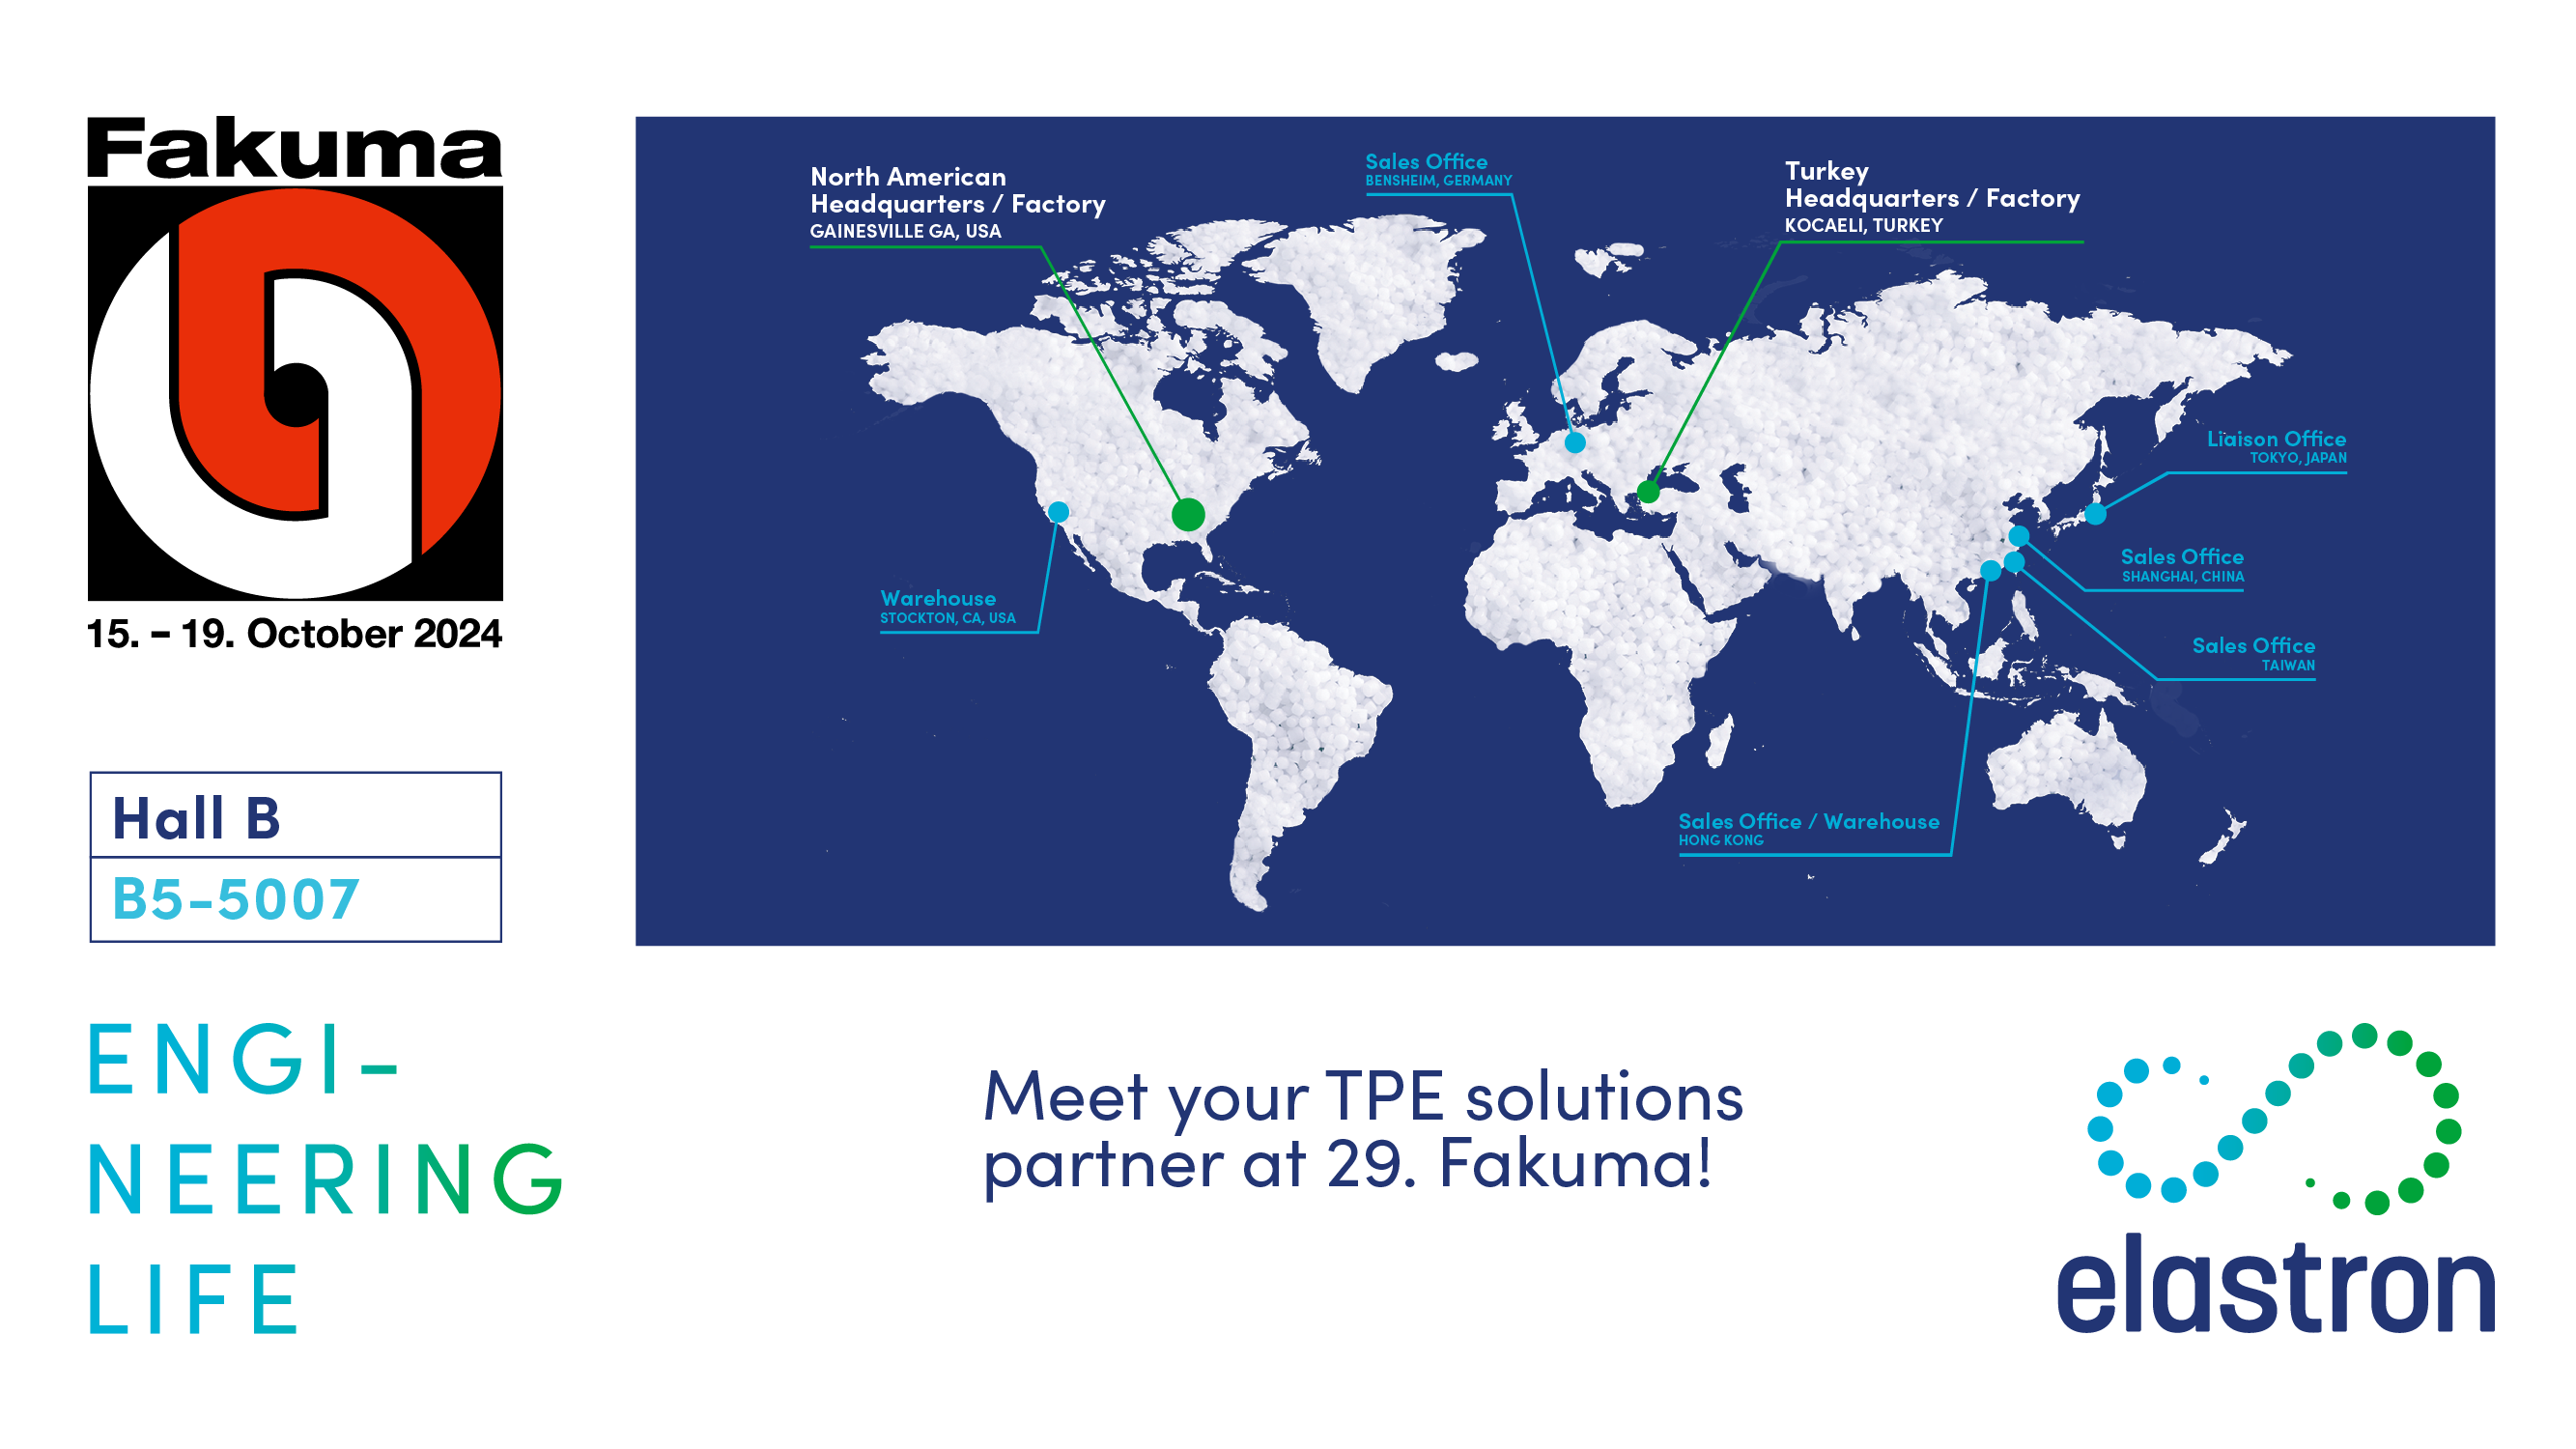 Meet your TPE solution partner at Fakuma 2024